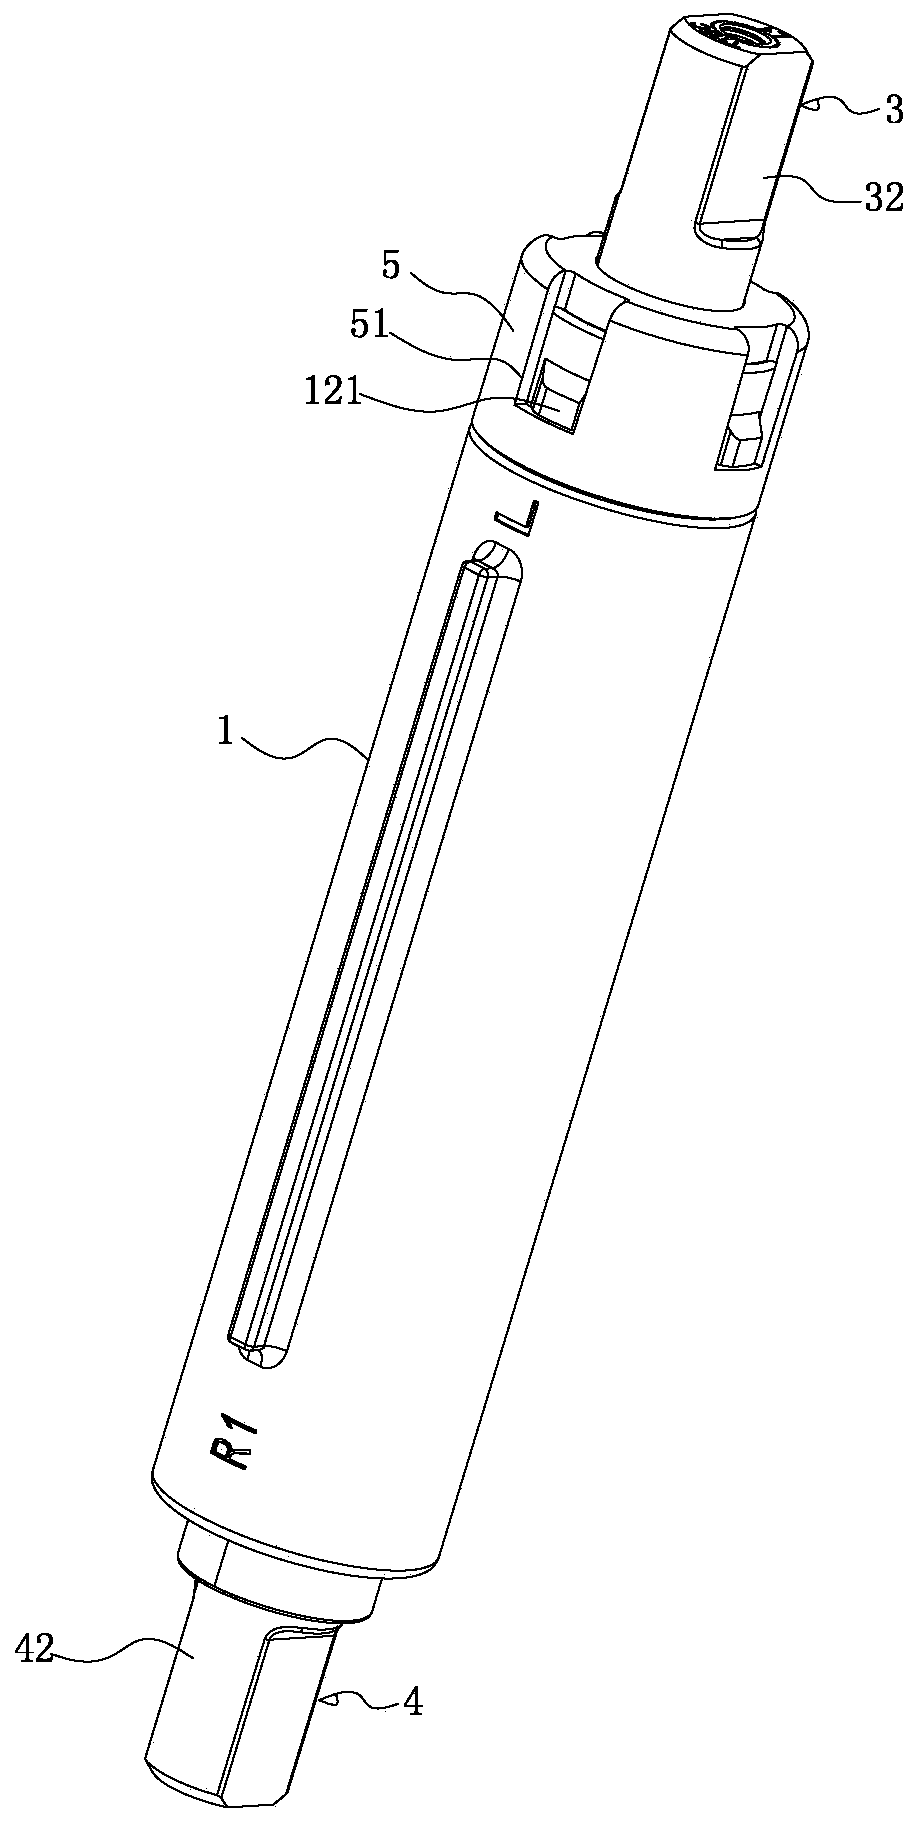 Novel bidirectional rotating shaft assisting damper